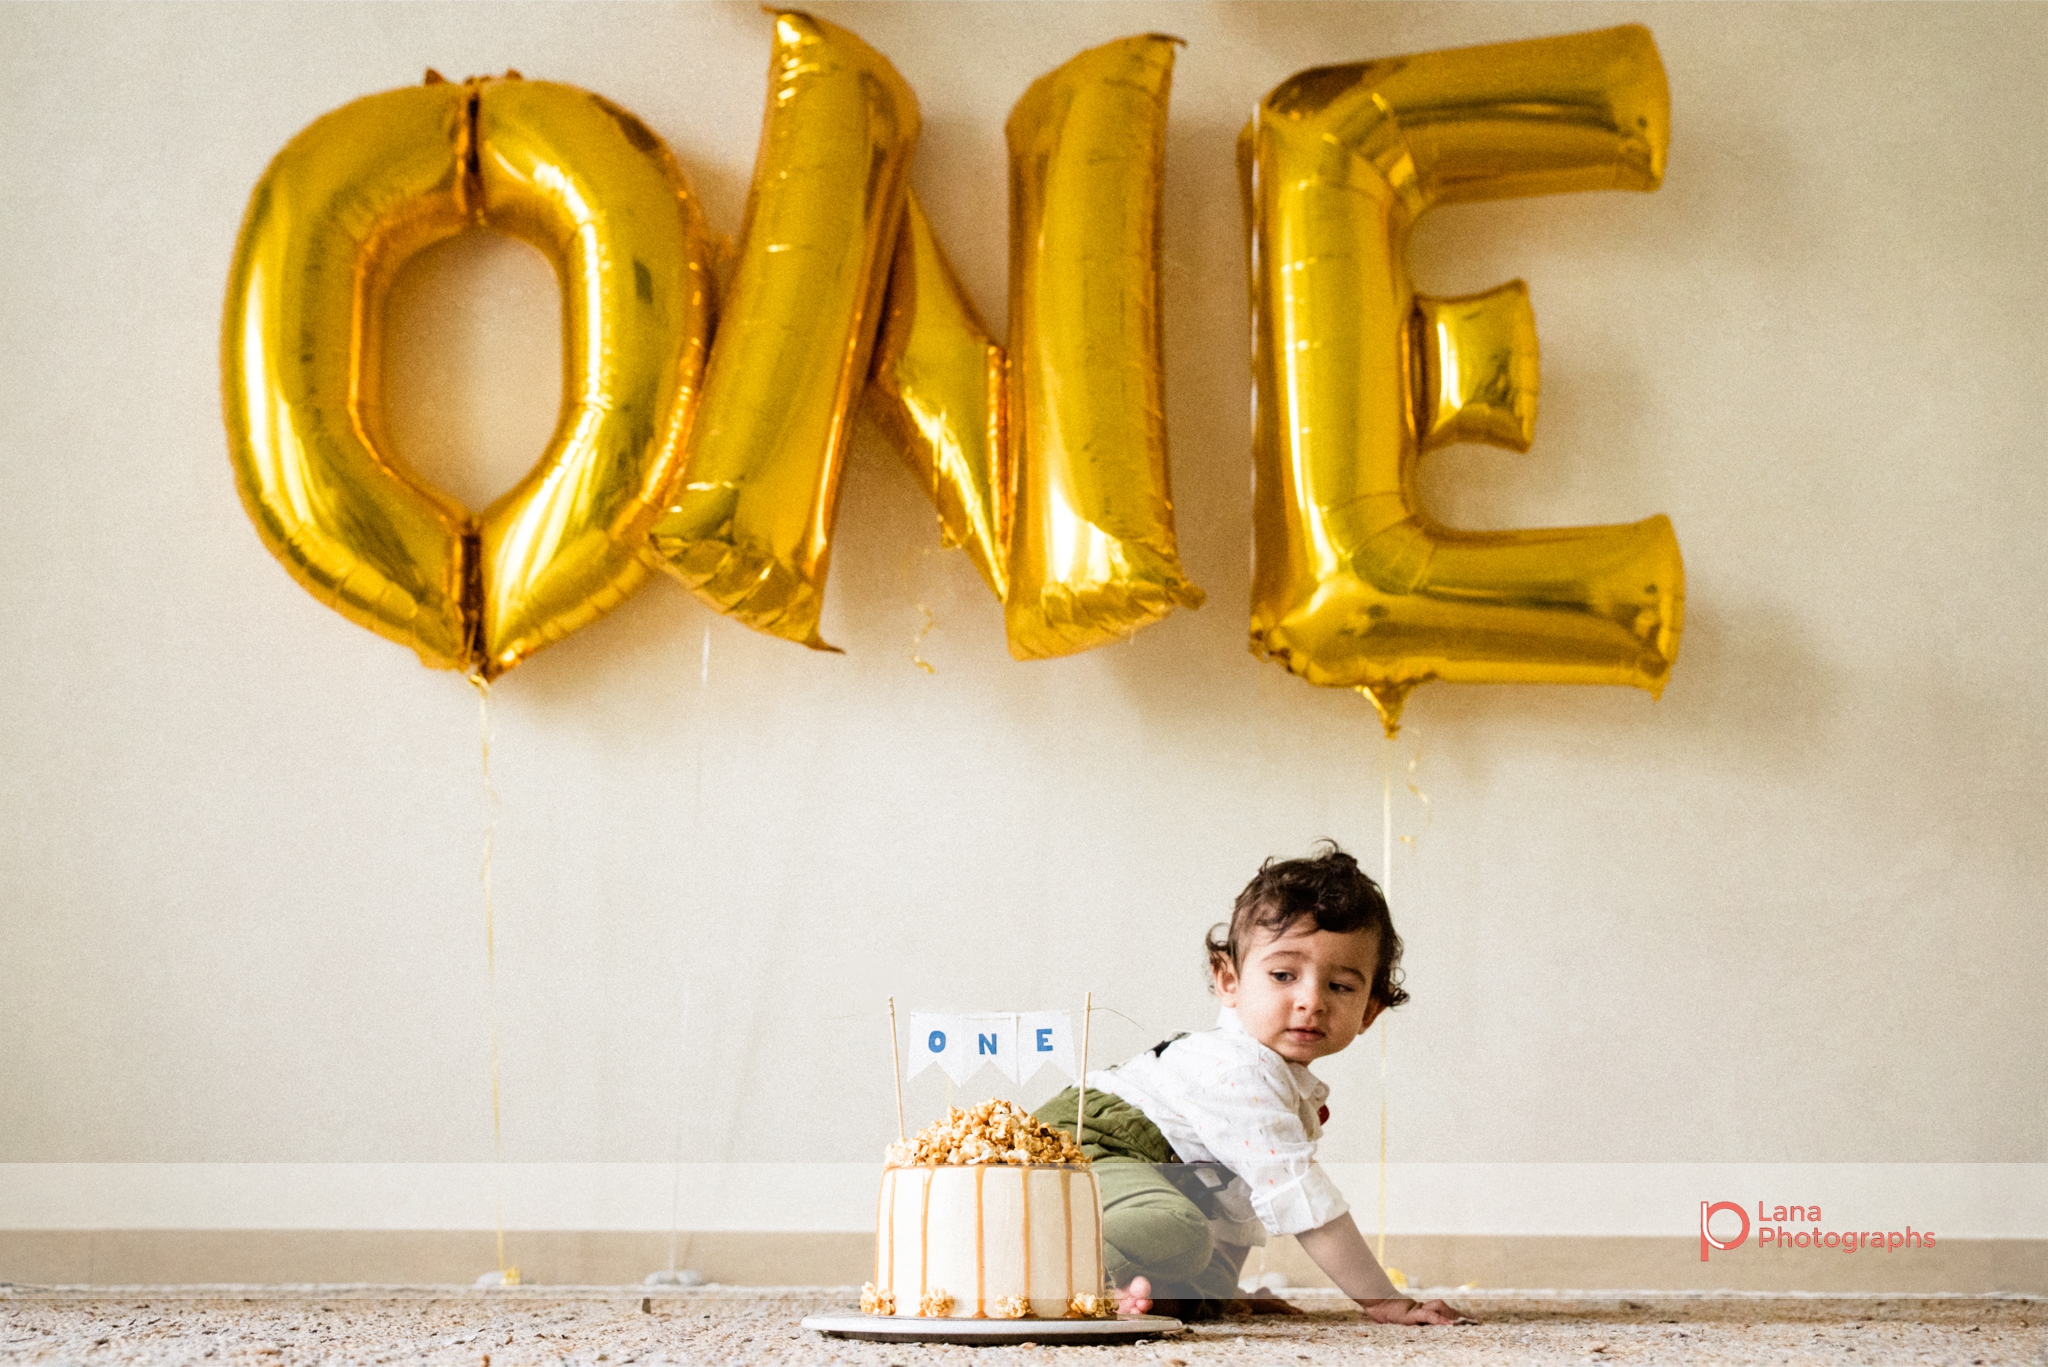 Cake Smash Dubai Baby poses with birthday cake and balloons